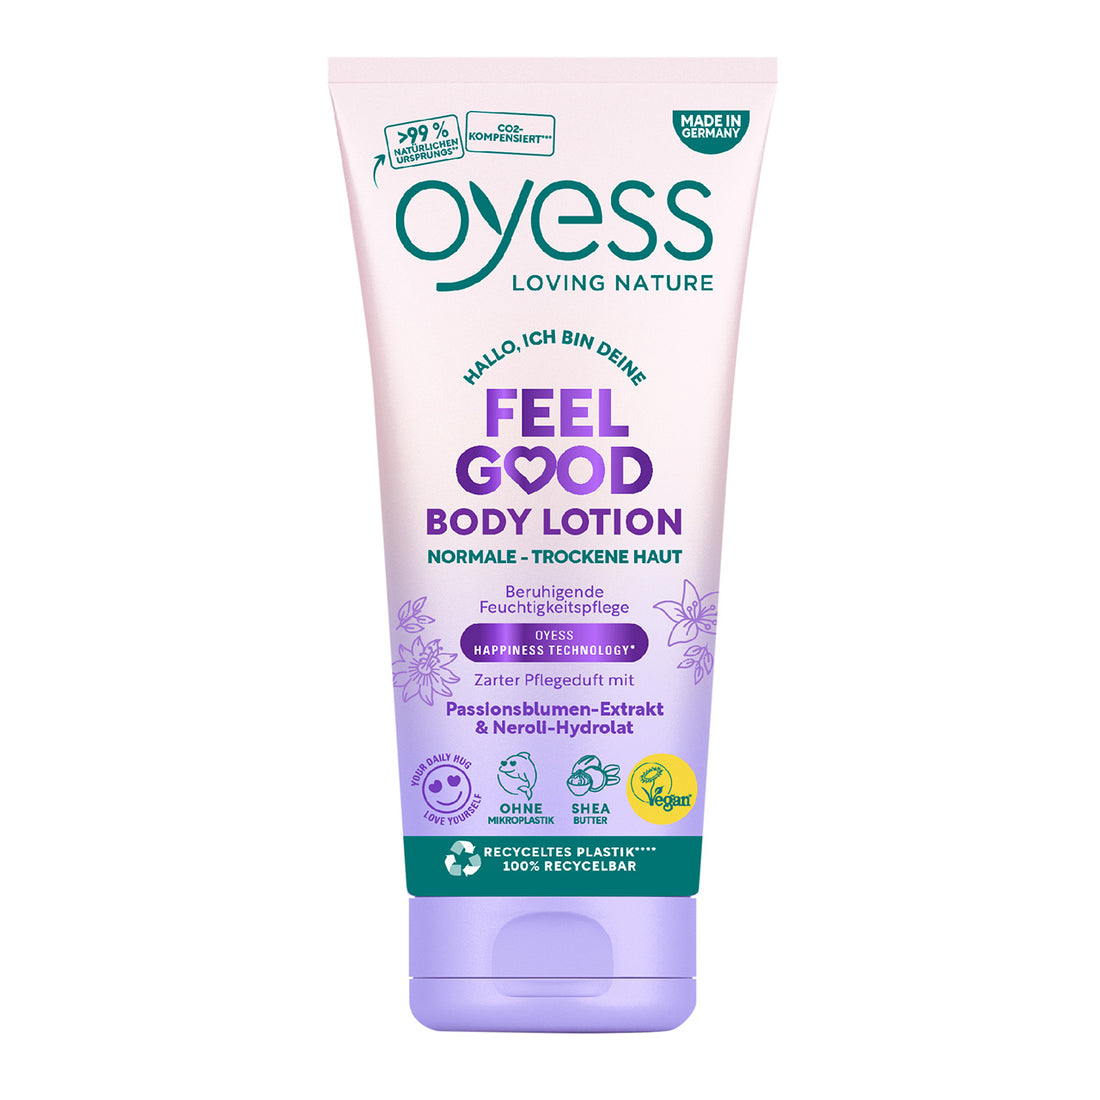 OYESS Feel Good Body Lotion - Caring